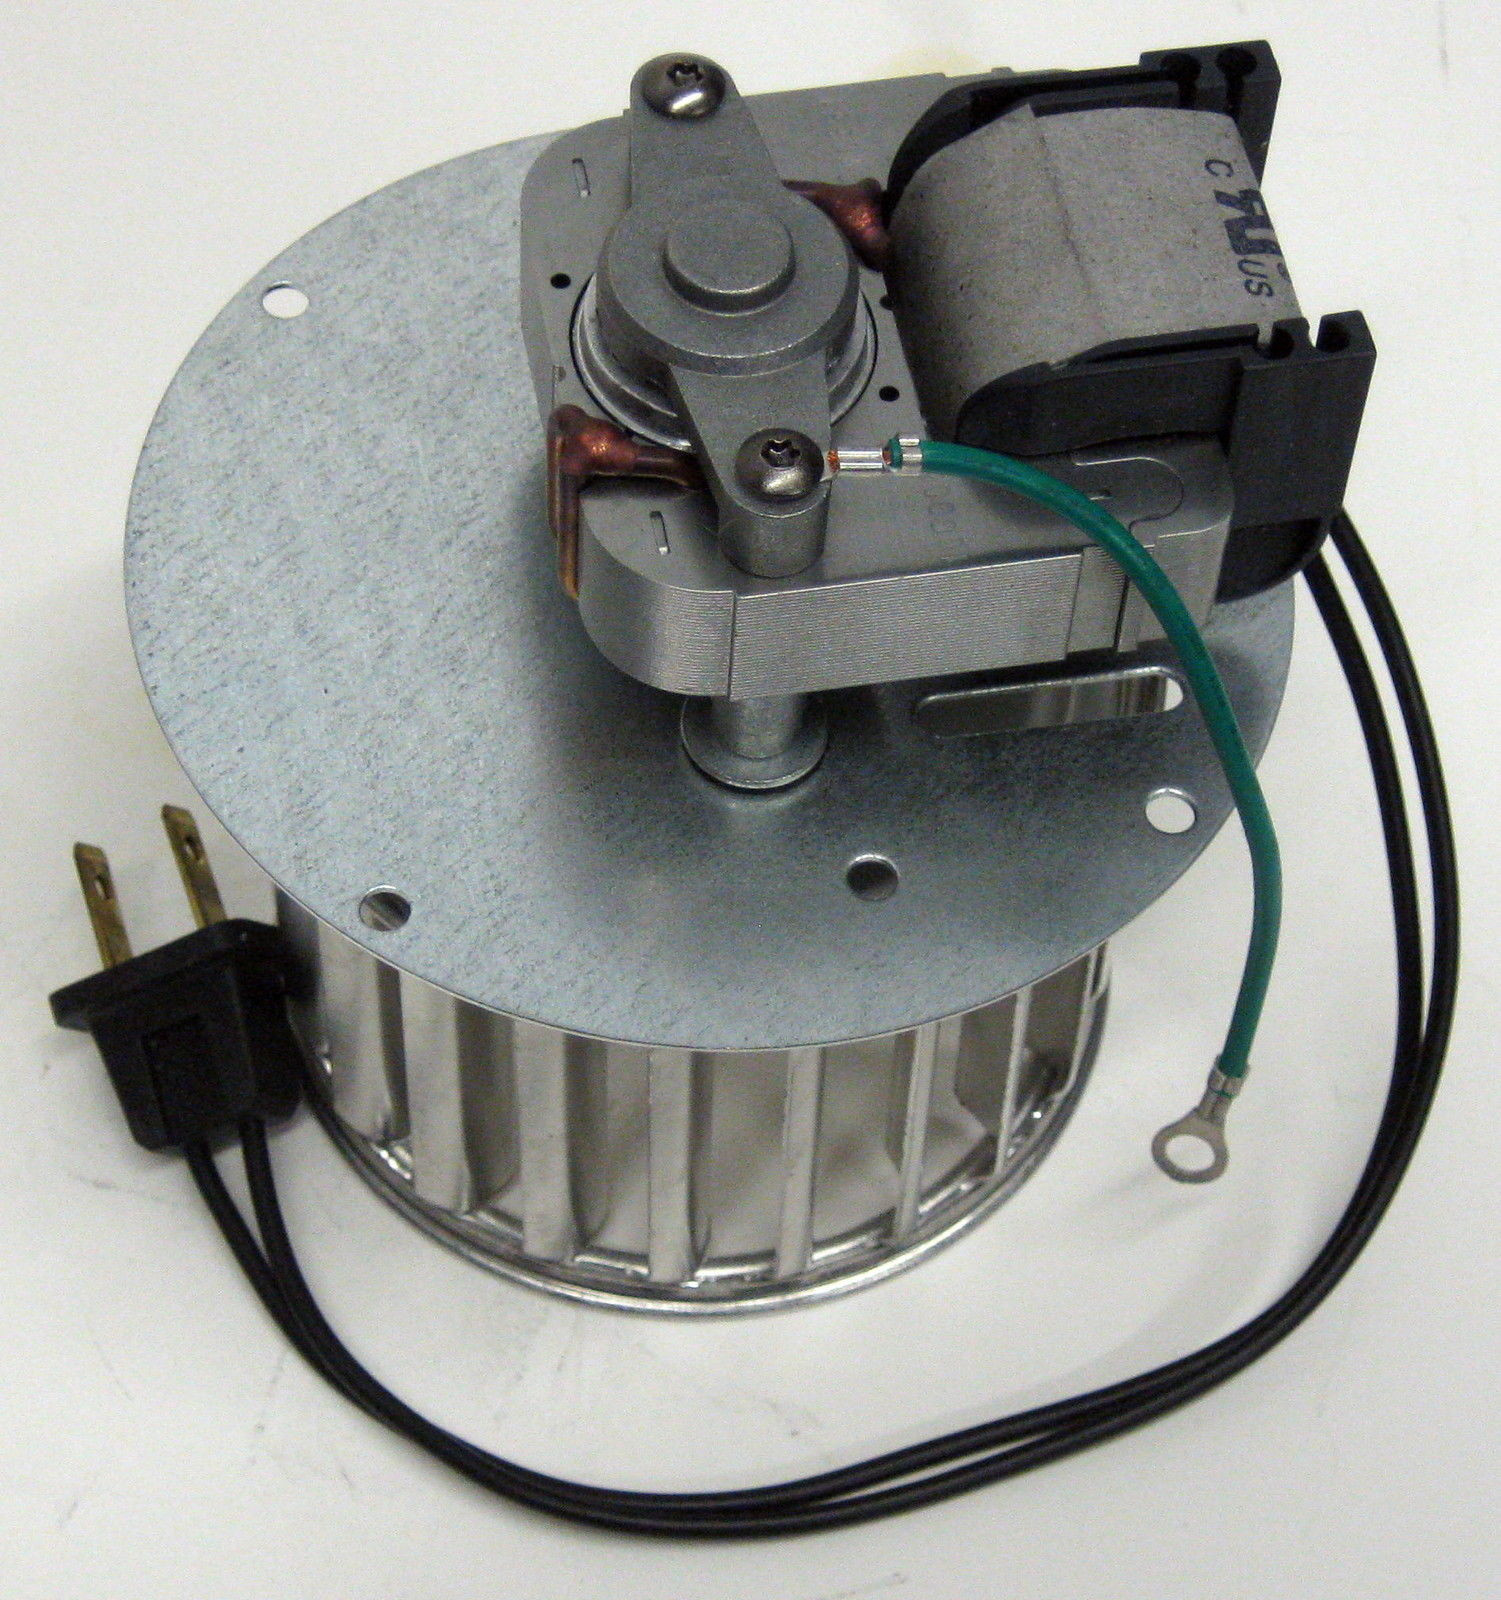 Best ideas about Broan Bathroom Fan Replacement
. Save or Pin Broan Kitchen Exhaust Fan Motors – Wow Blog Now.